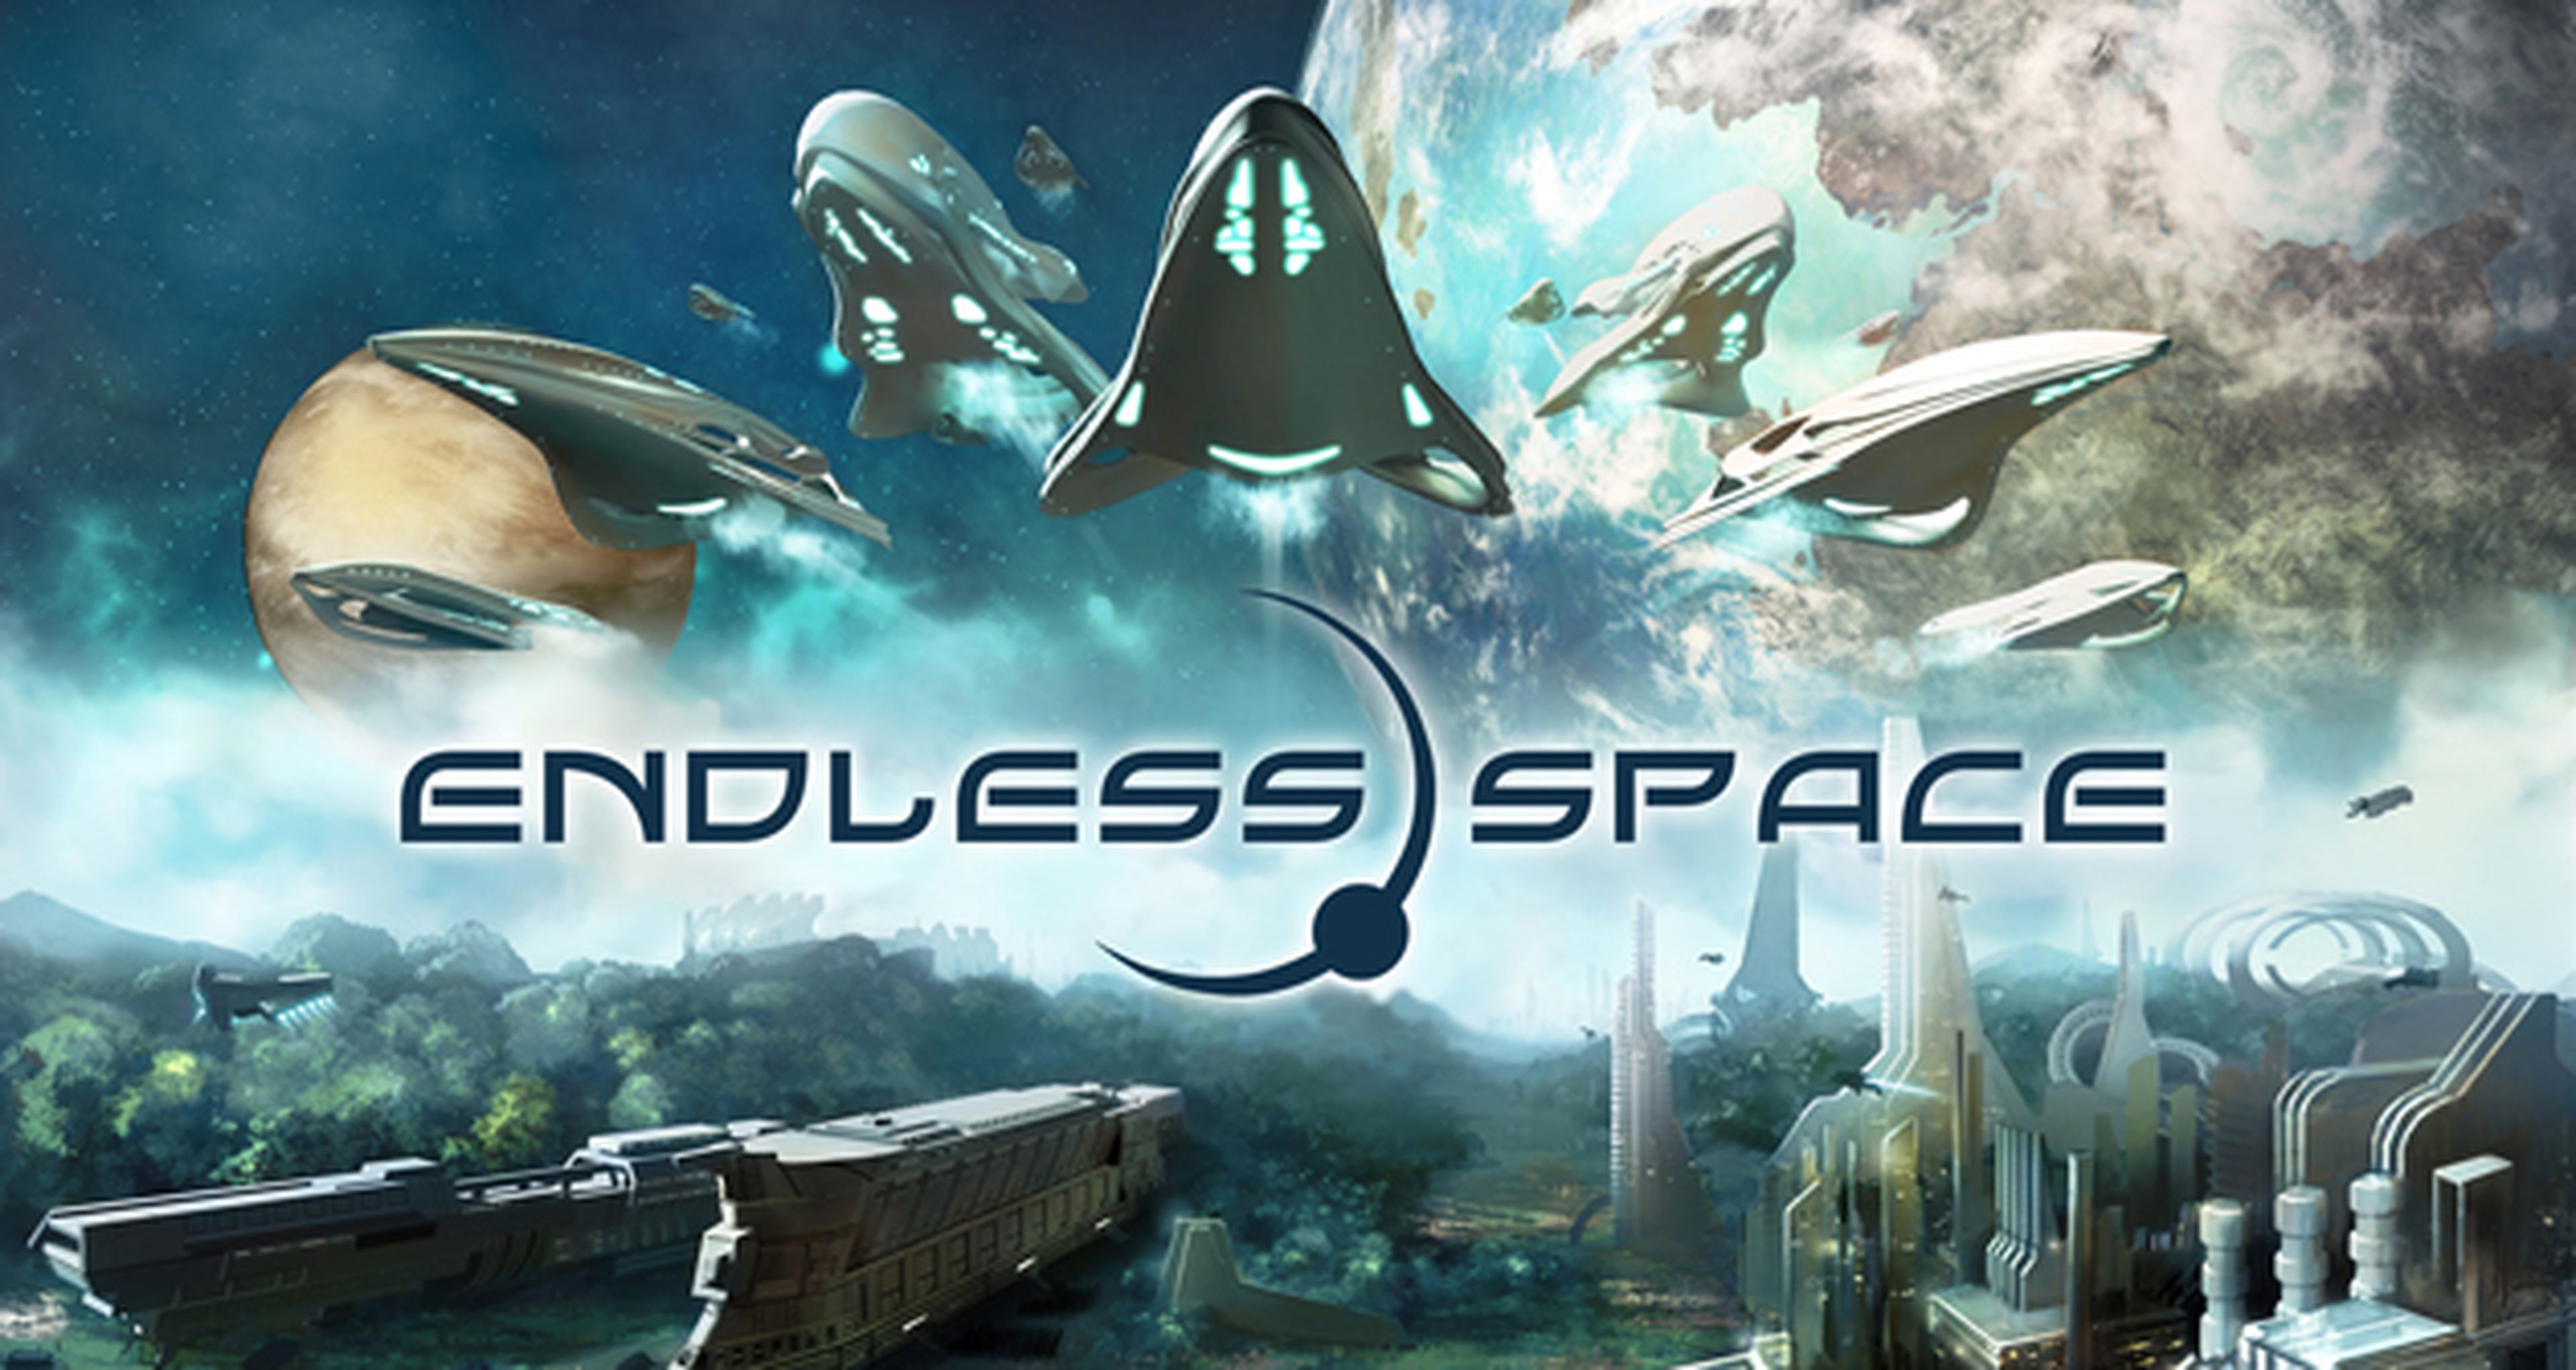 Endless Space gratis este finde en Steam